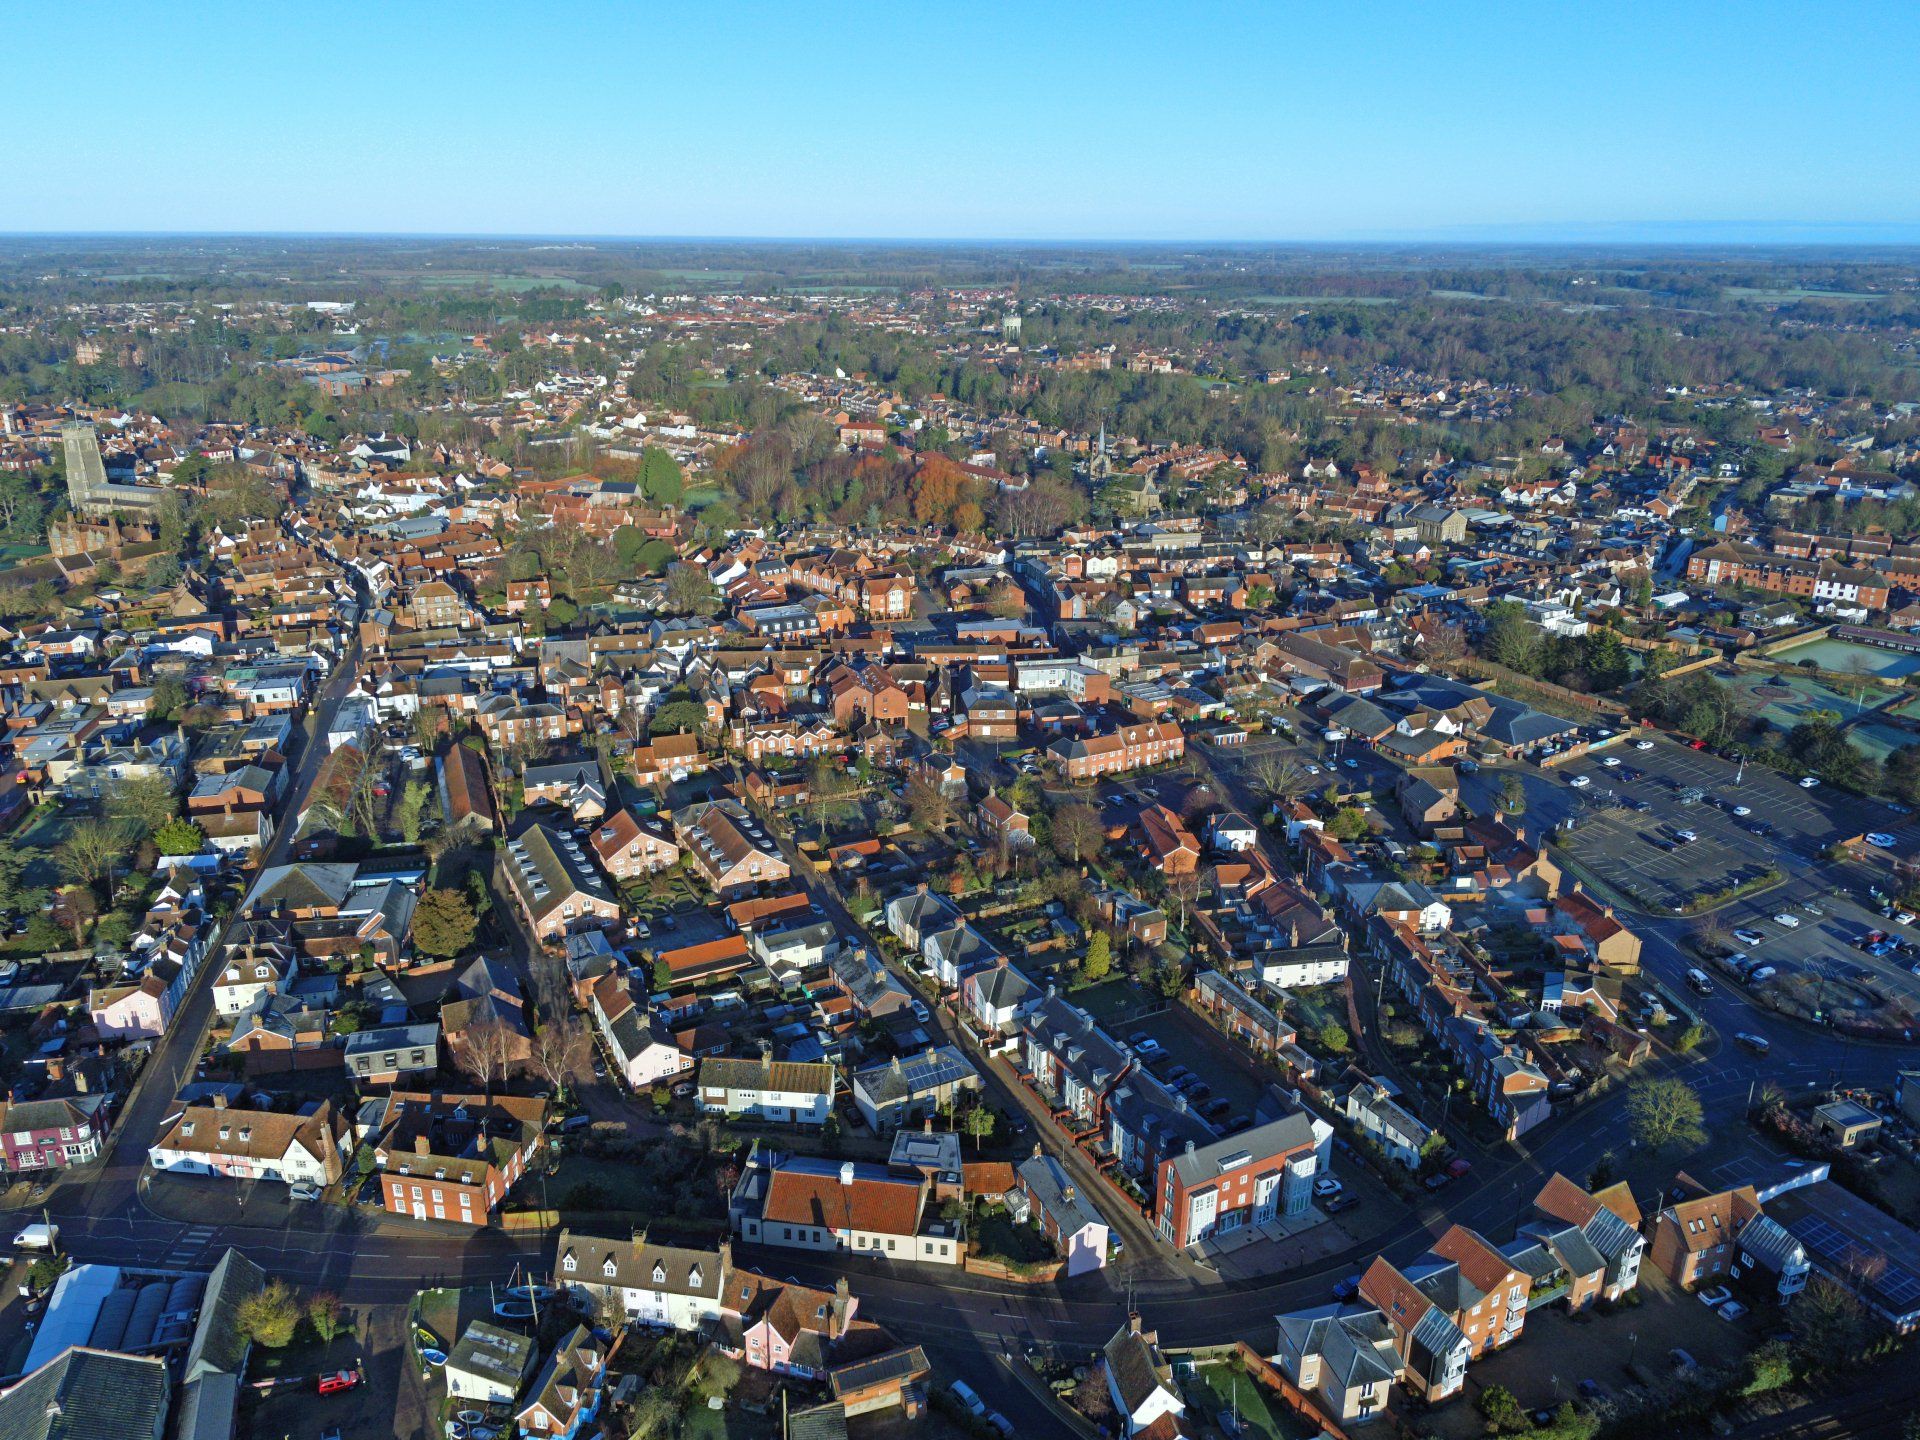 Aerial photo of Woodbridge - David Mortimer